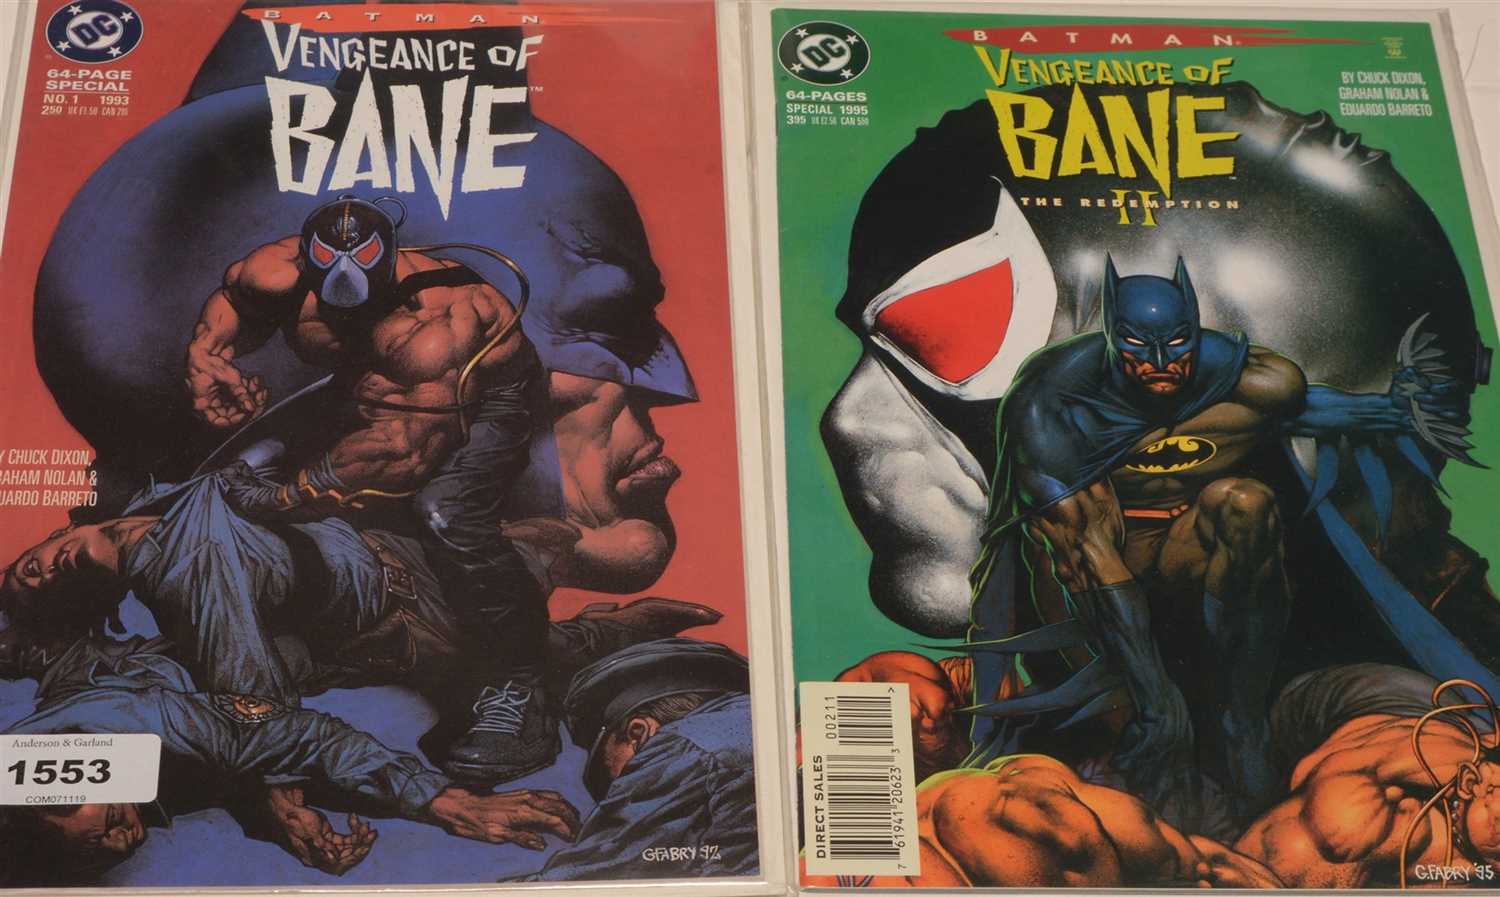 Lot 1553 - Batman Vengeance of Bane Special and Vengence of Bane II